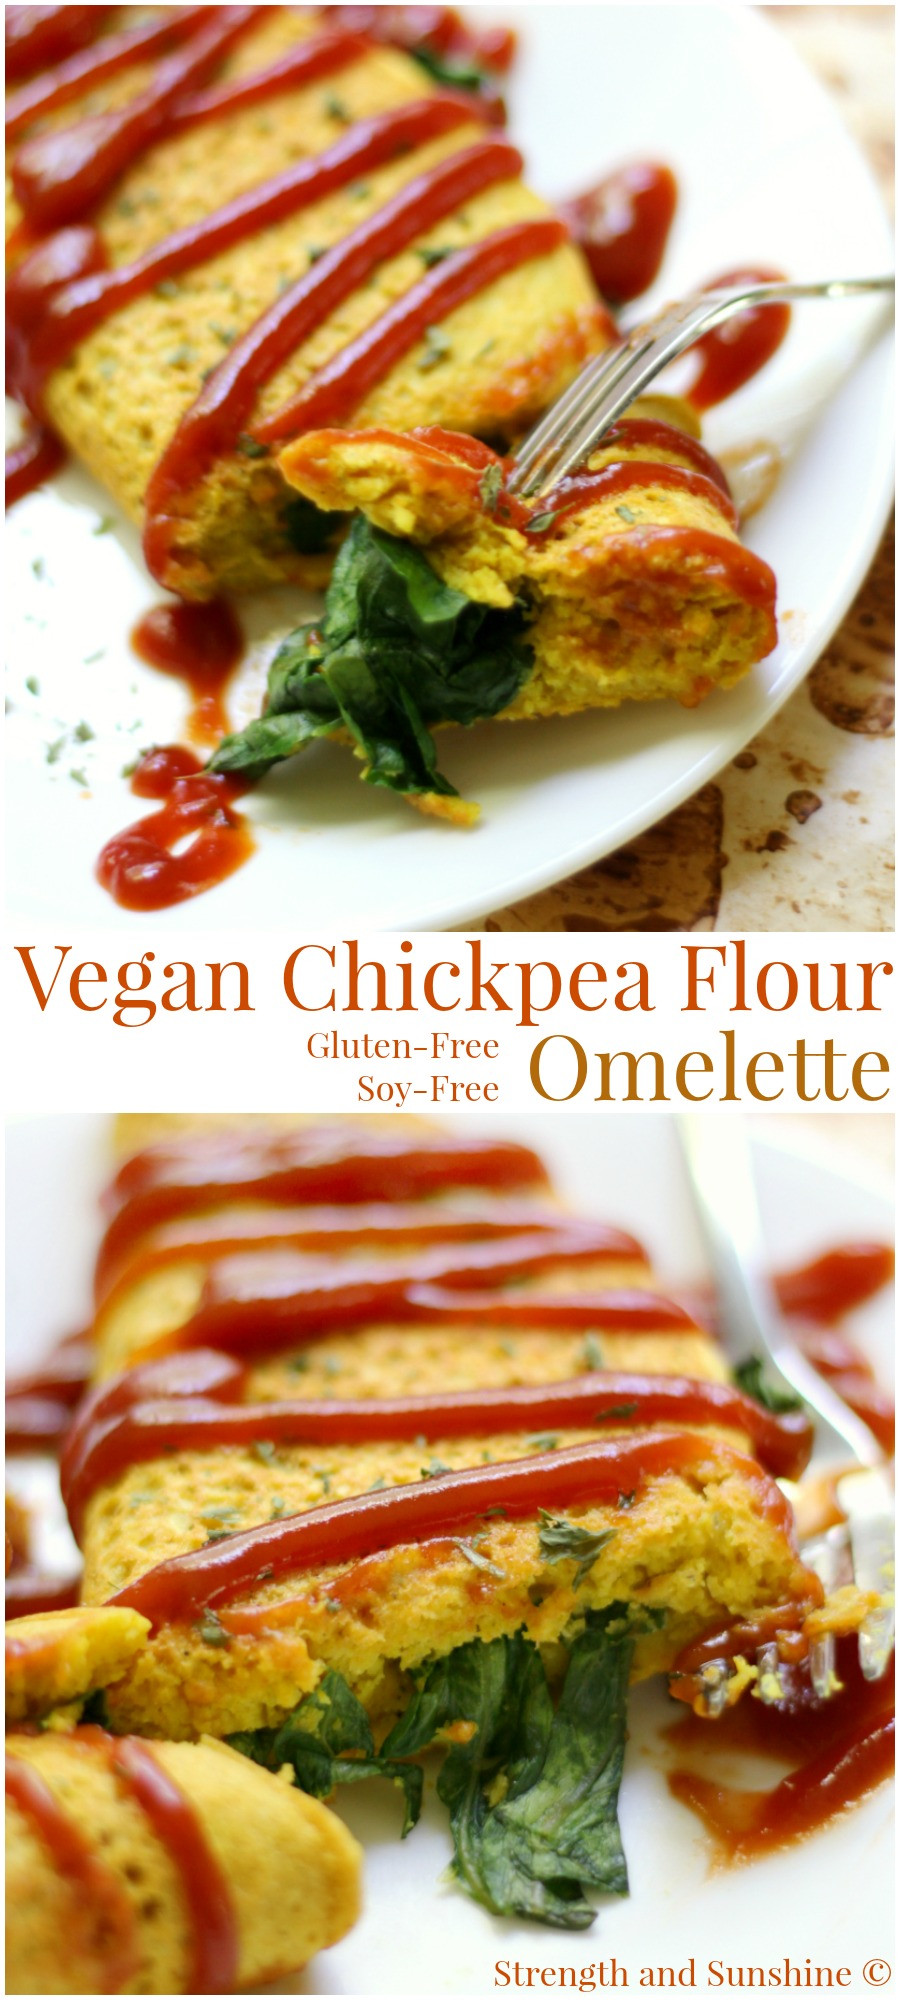 Chickpea Flour Recipes Vegan
 Vegan Chickpea Flour Omelette